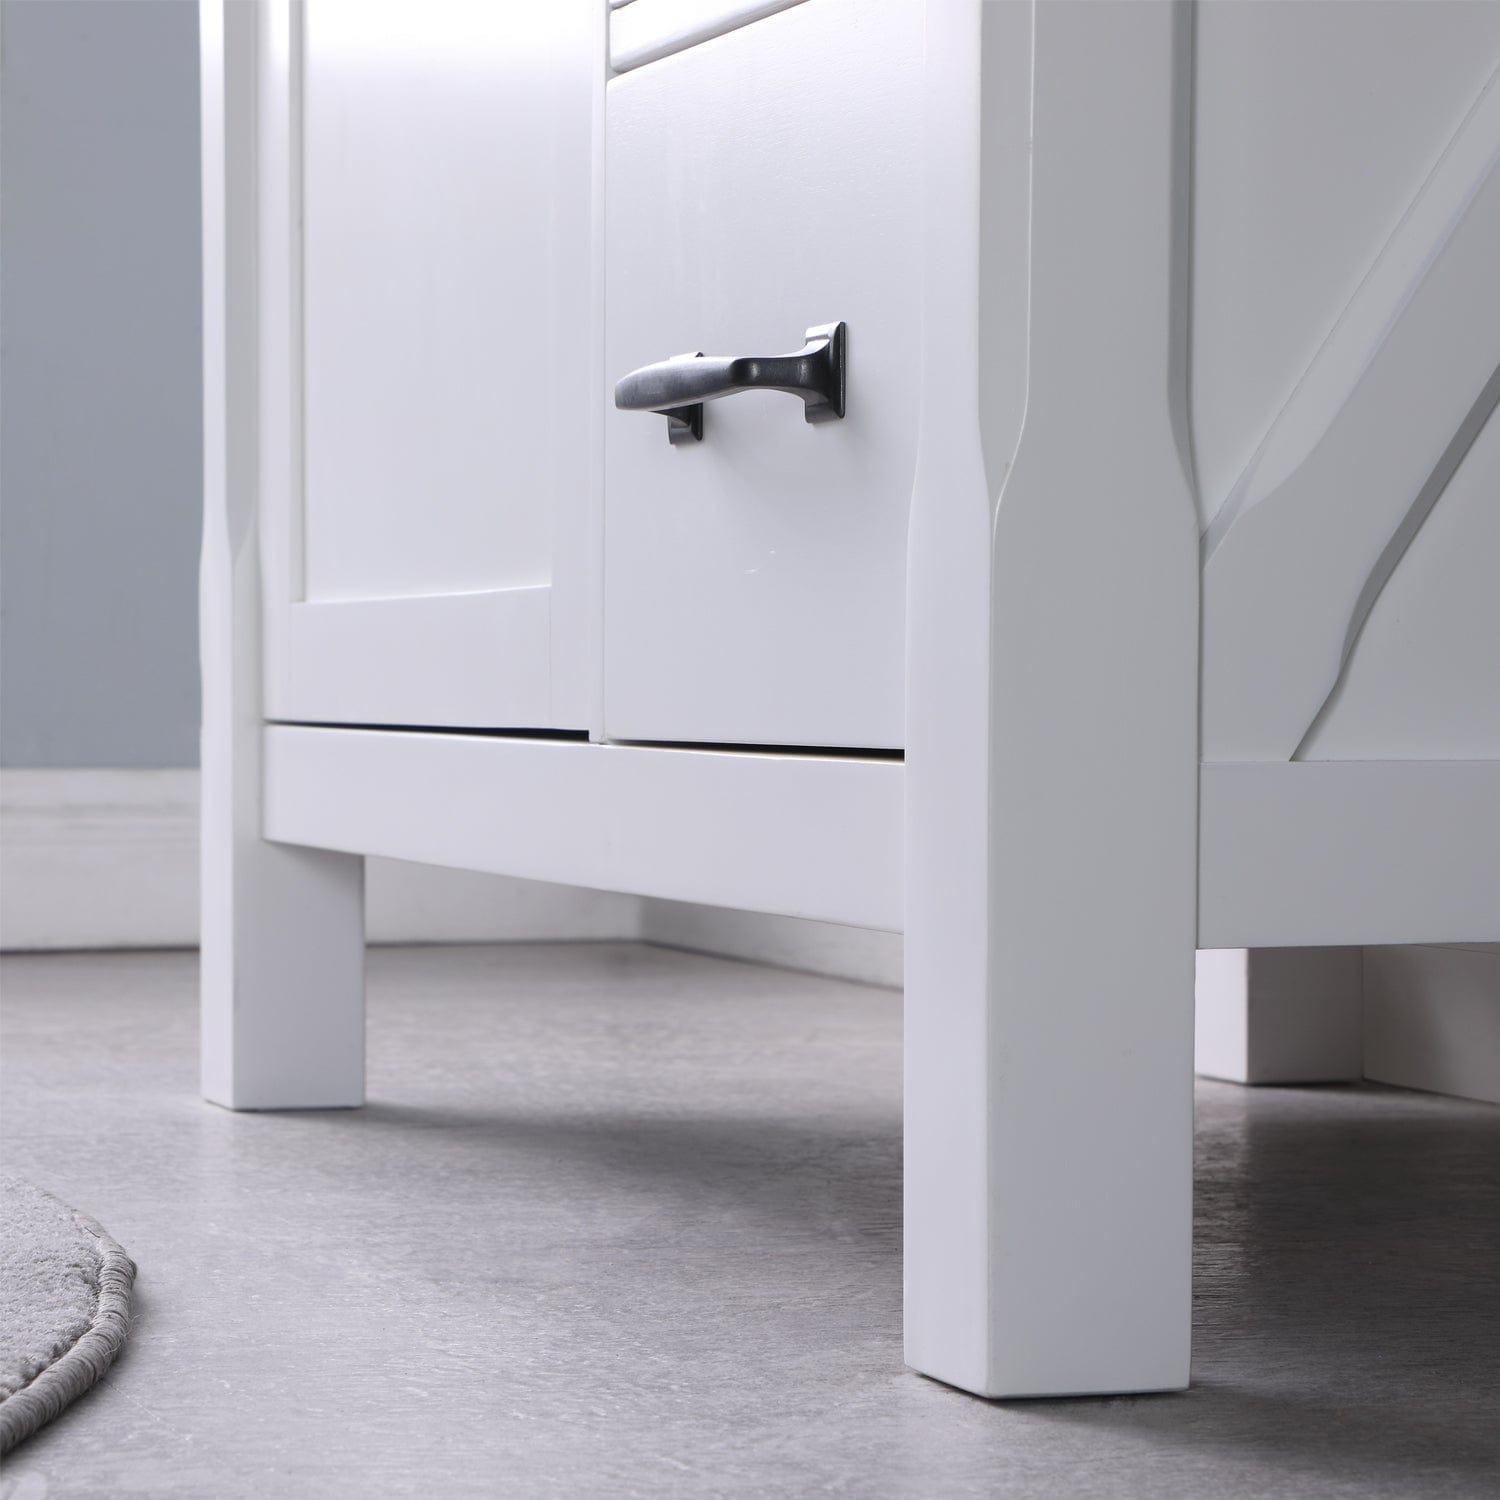 Altair Maribella 36" Single Bathroom Vanity Set in White and Carrara White Marble Countertop with Mirror 535036-WH-CA - Molaix631112970297Vanity535036-WH-CA